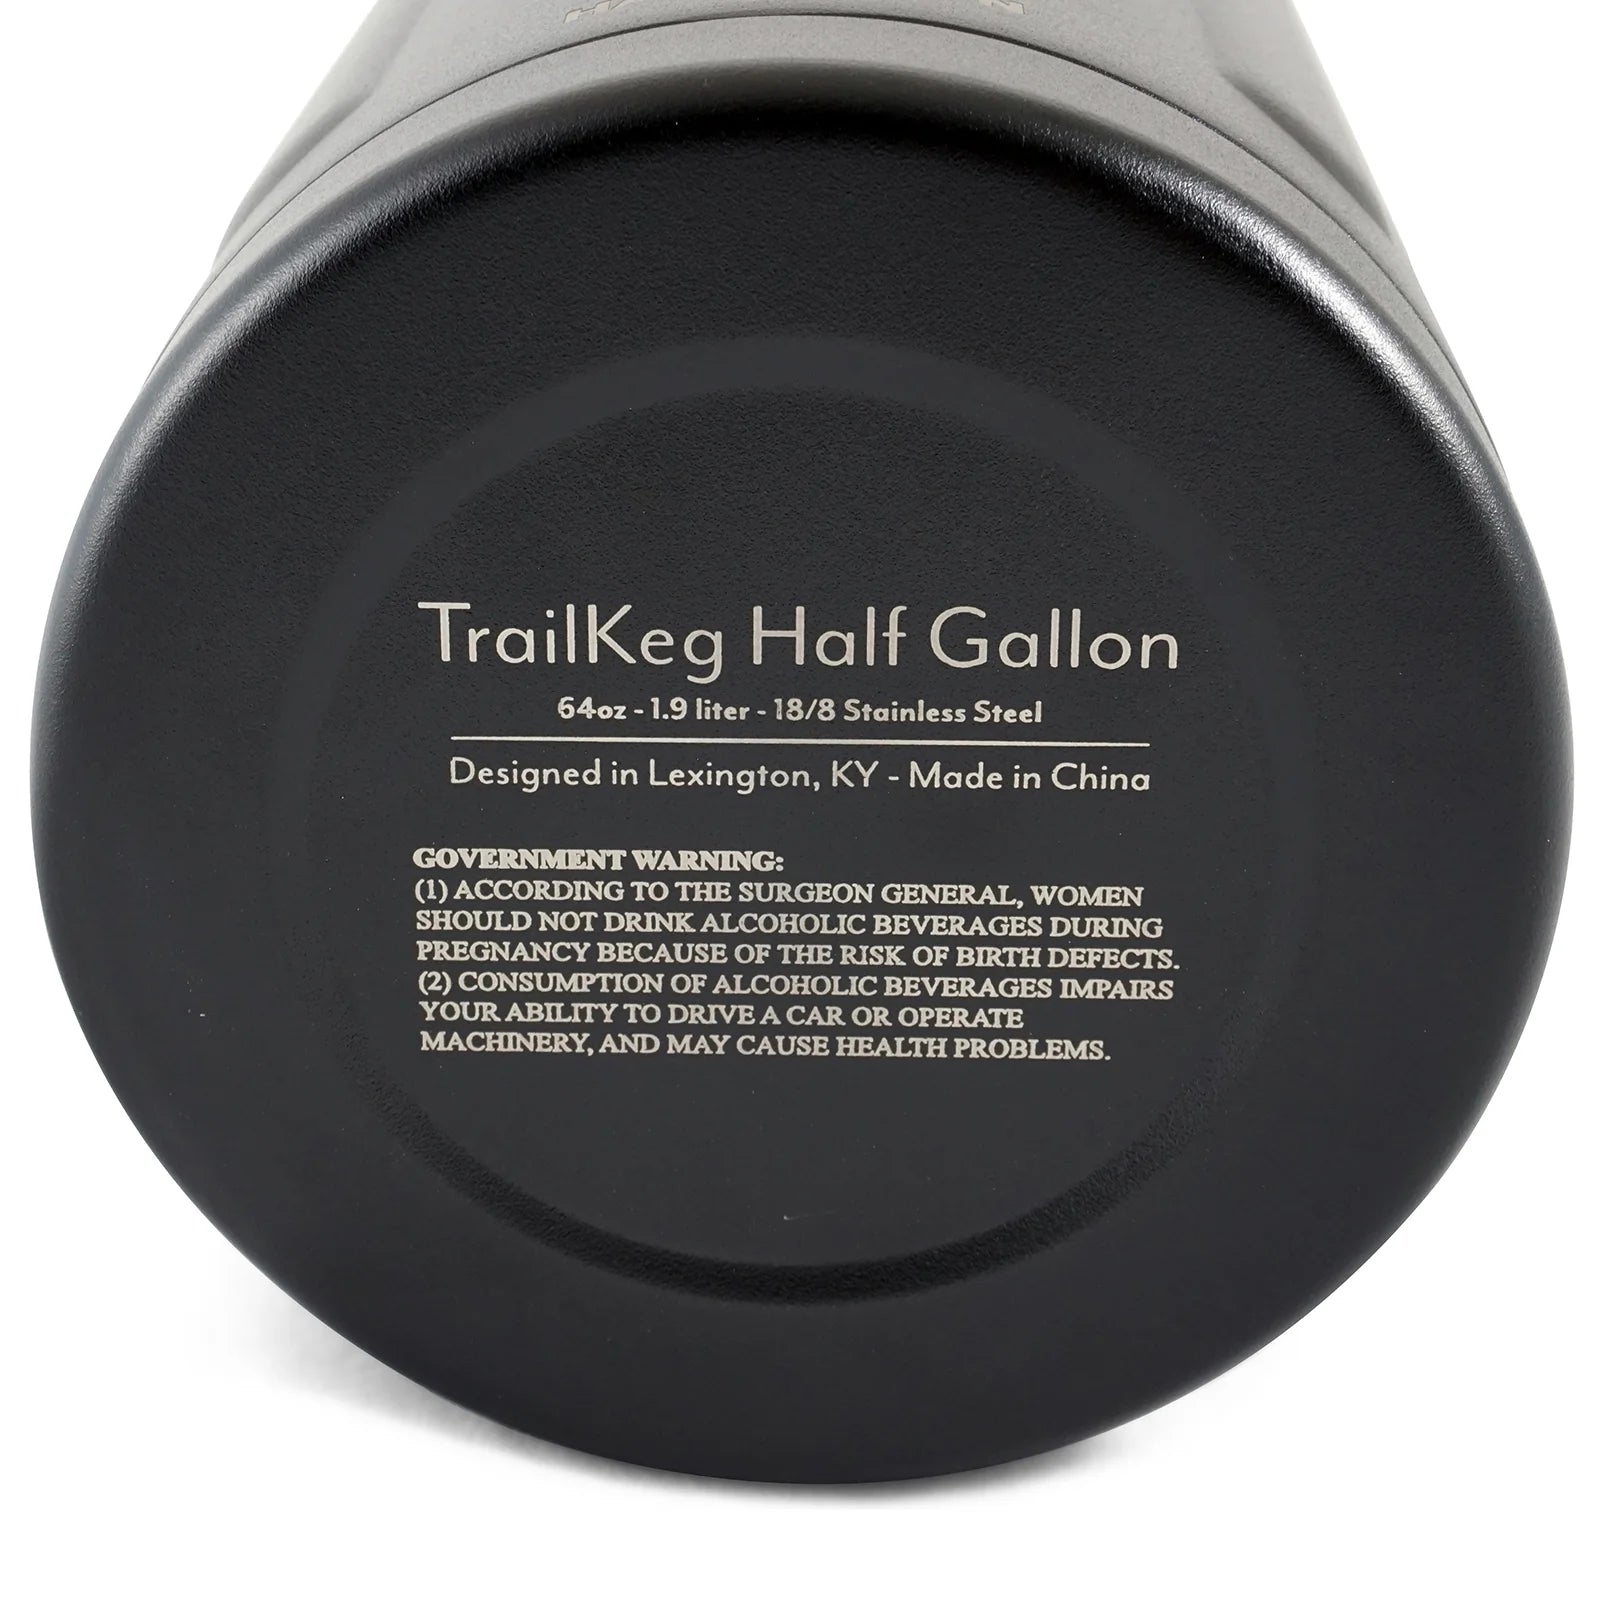 TrailKeg Half Gallon Package